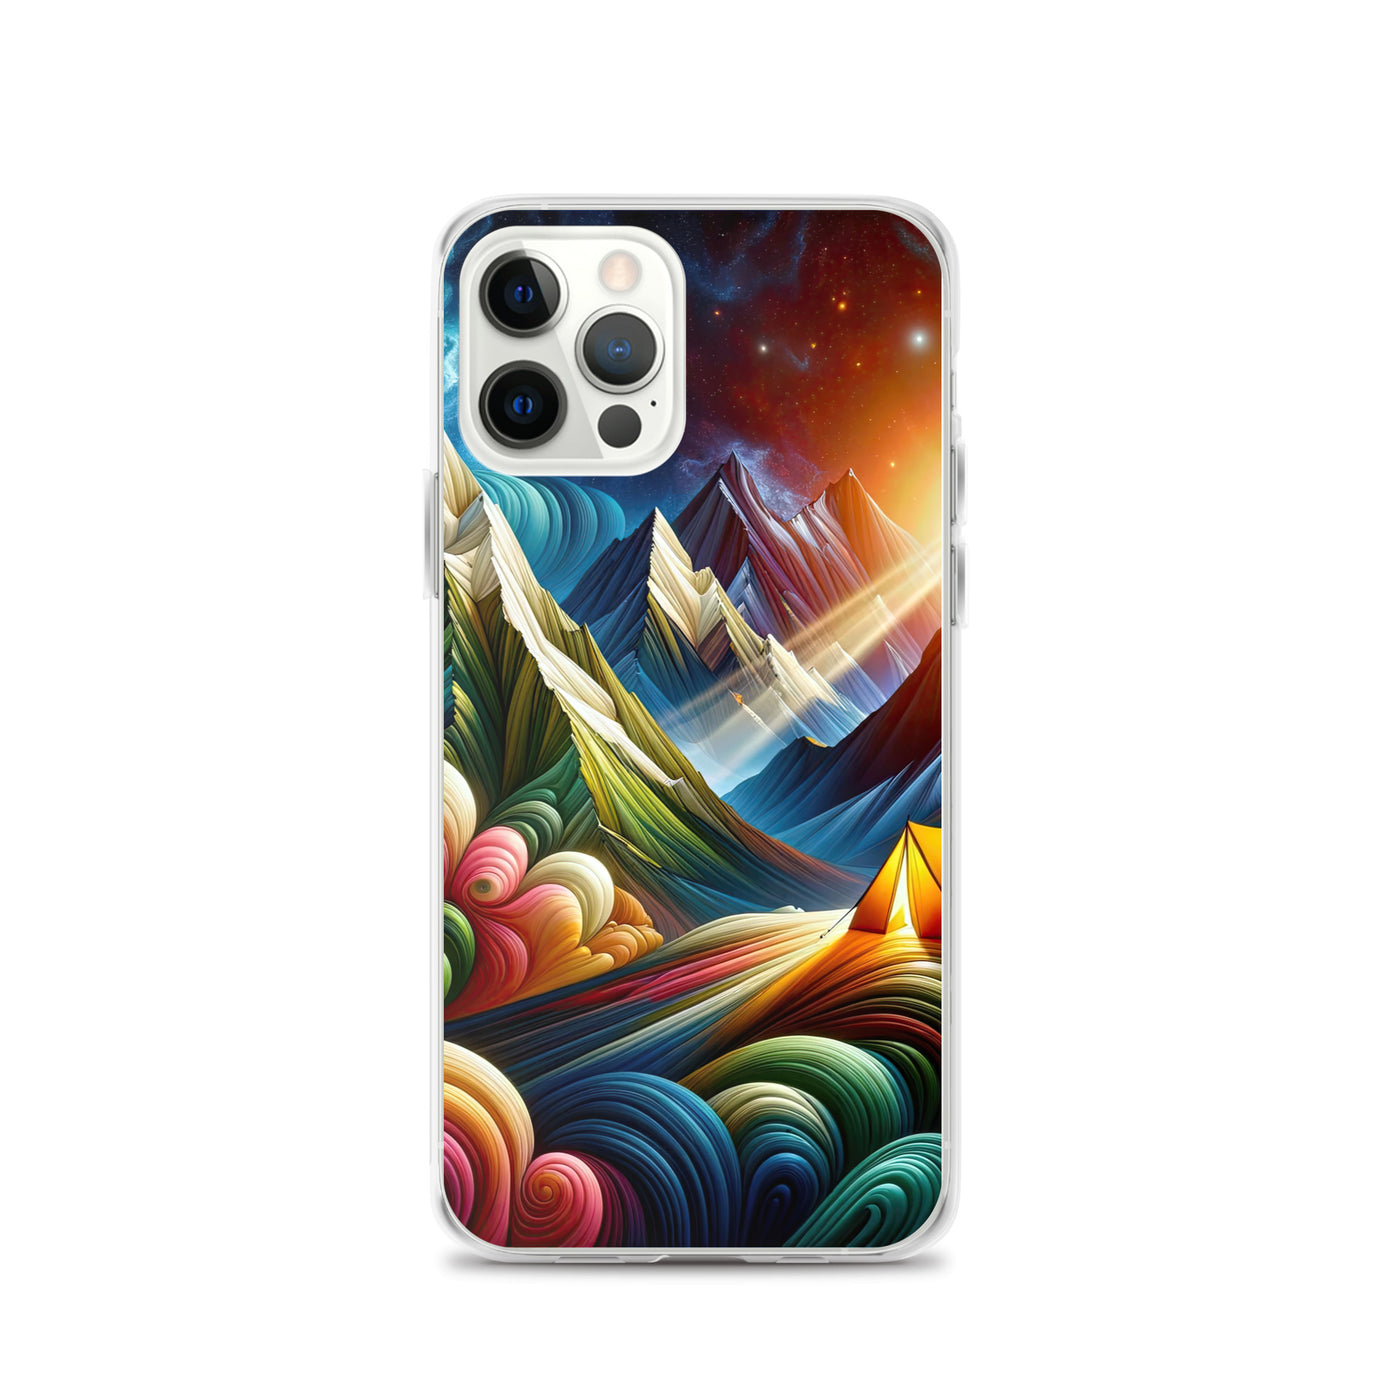 Abstrakte Bergwelt in lebendigen Farben mit Zelt - iPhone Schutzhülle (durchsichtig) camping xxx yyy zzz iPhone 12 Pro